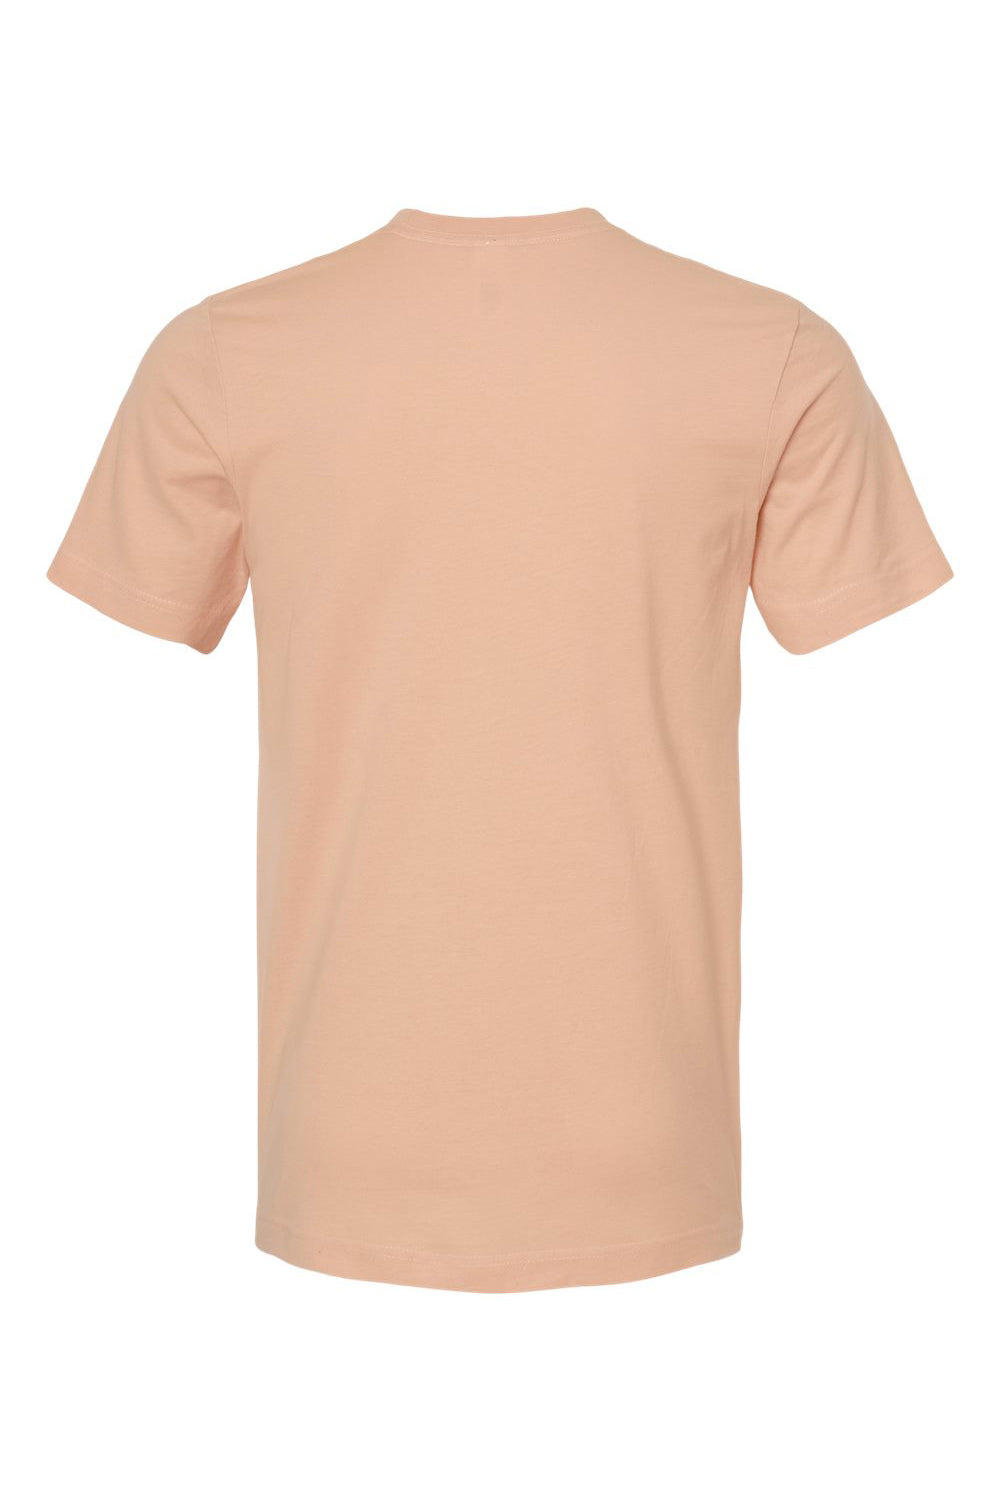 Tultex 502 Mens Premium Short Sleeve Crewneck T-Shirt Peach Flat Back